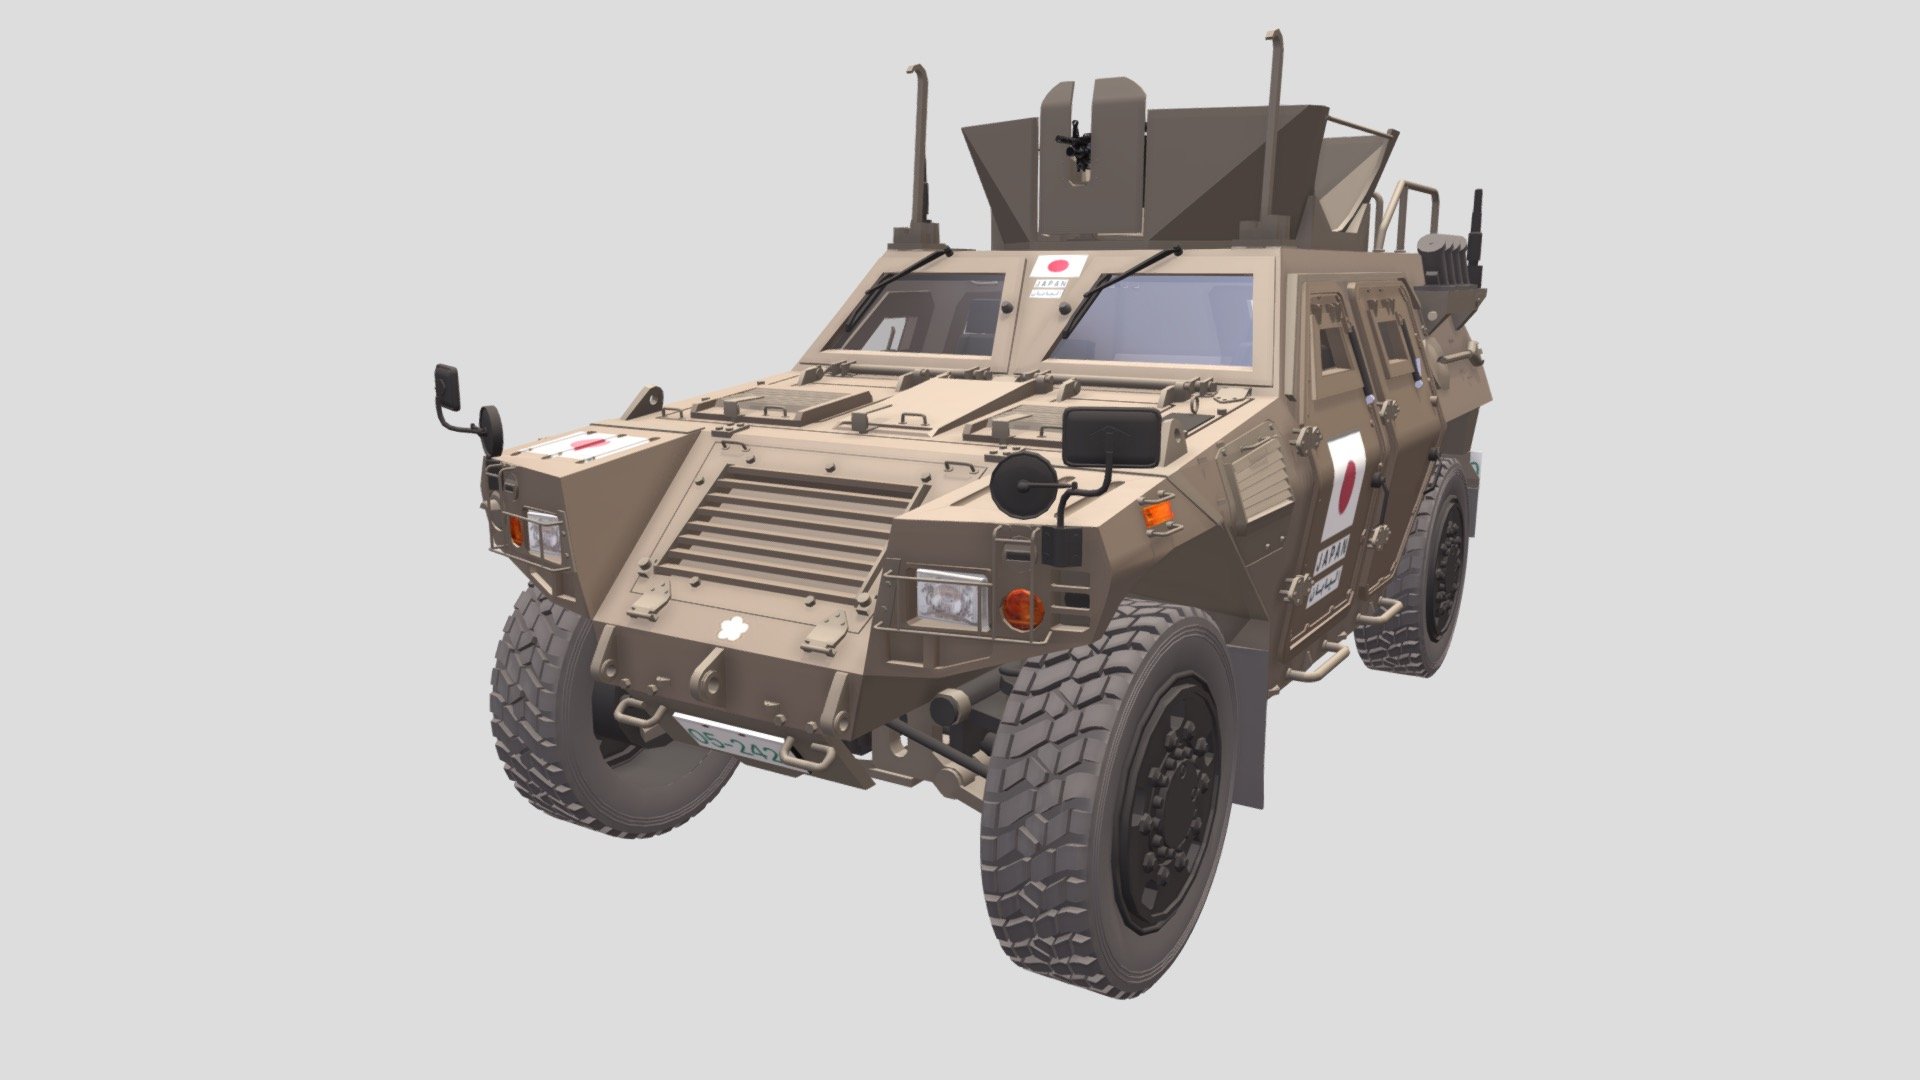 Japan Komatsu light armored vehicle (LAV).

小松製作所輕裝甲機動車，伊拉克戰爭款式。 - Komatsu LAV (Iraq) / interior - 3D model by Basic Hsu (@Hsu.Pei.Ge) 3d model